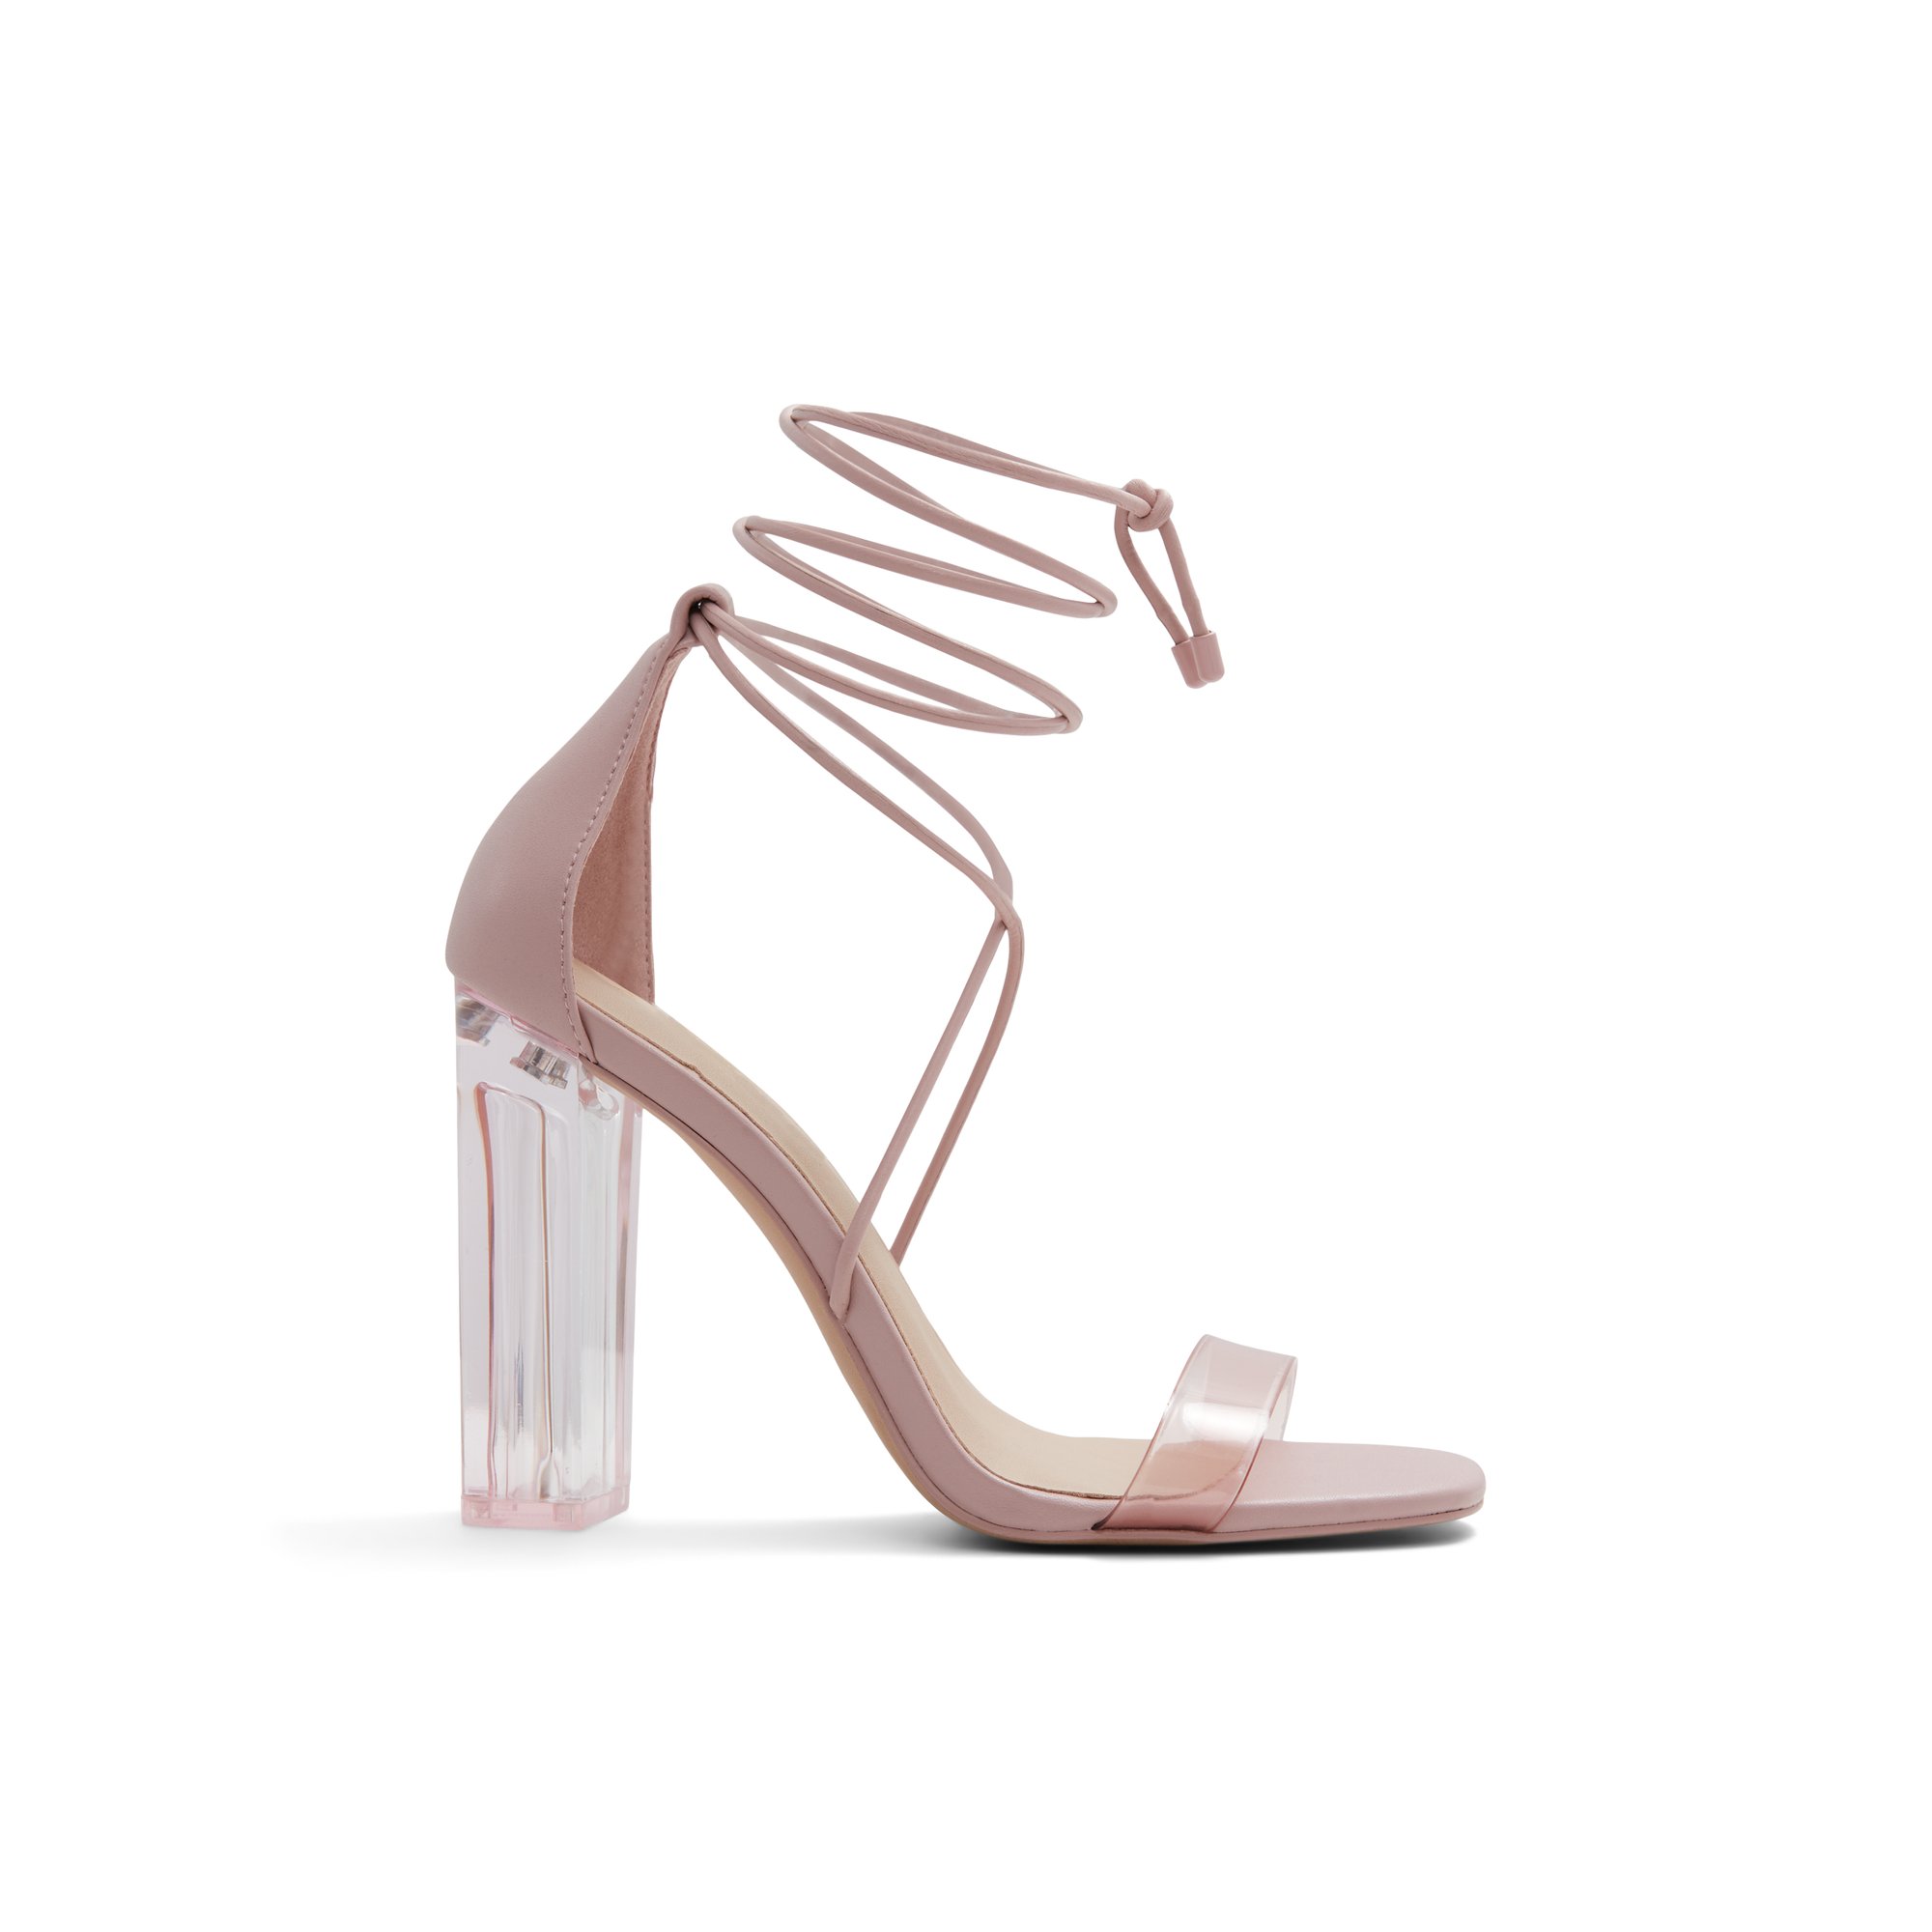 ALDO Onardonia - Women's Strappy Sandal Sandals - Pink